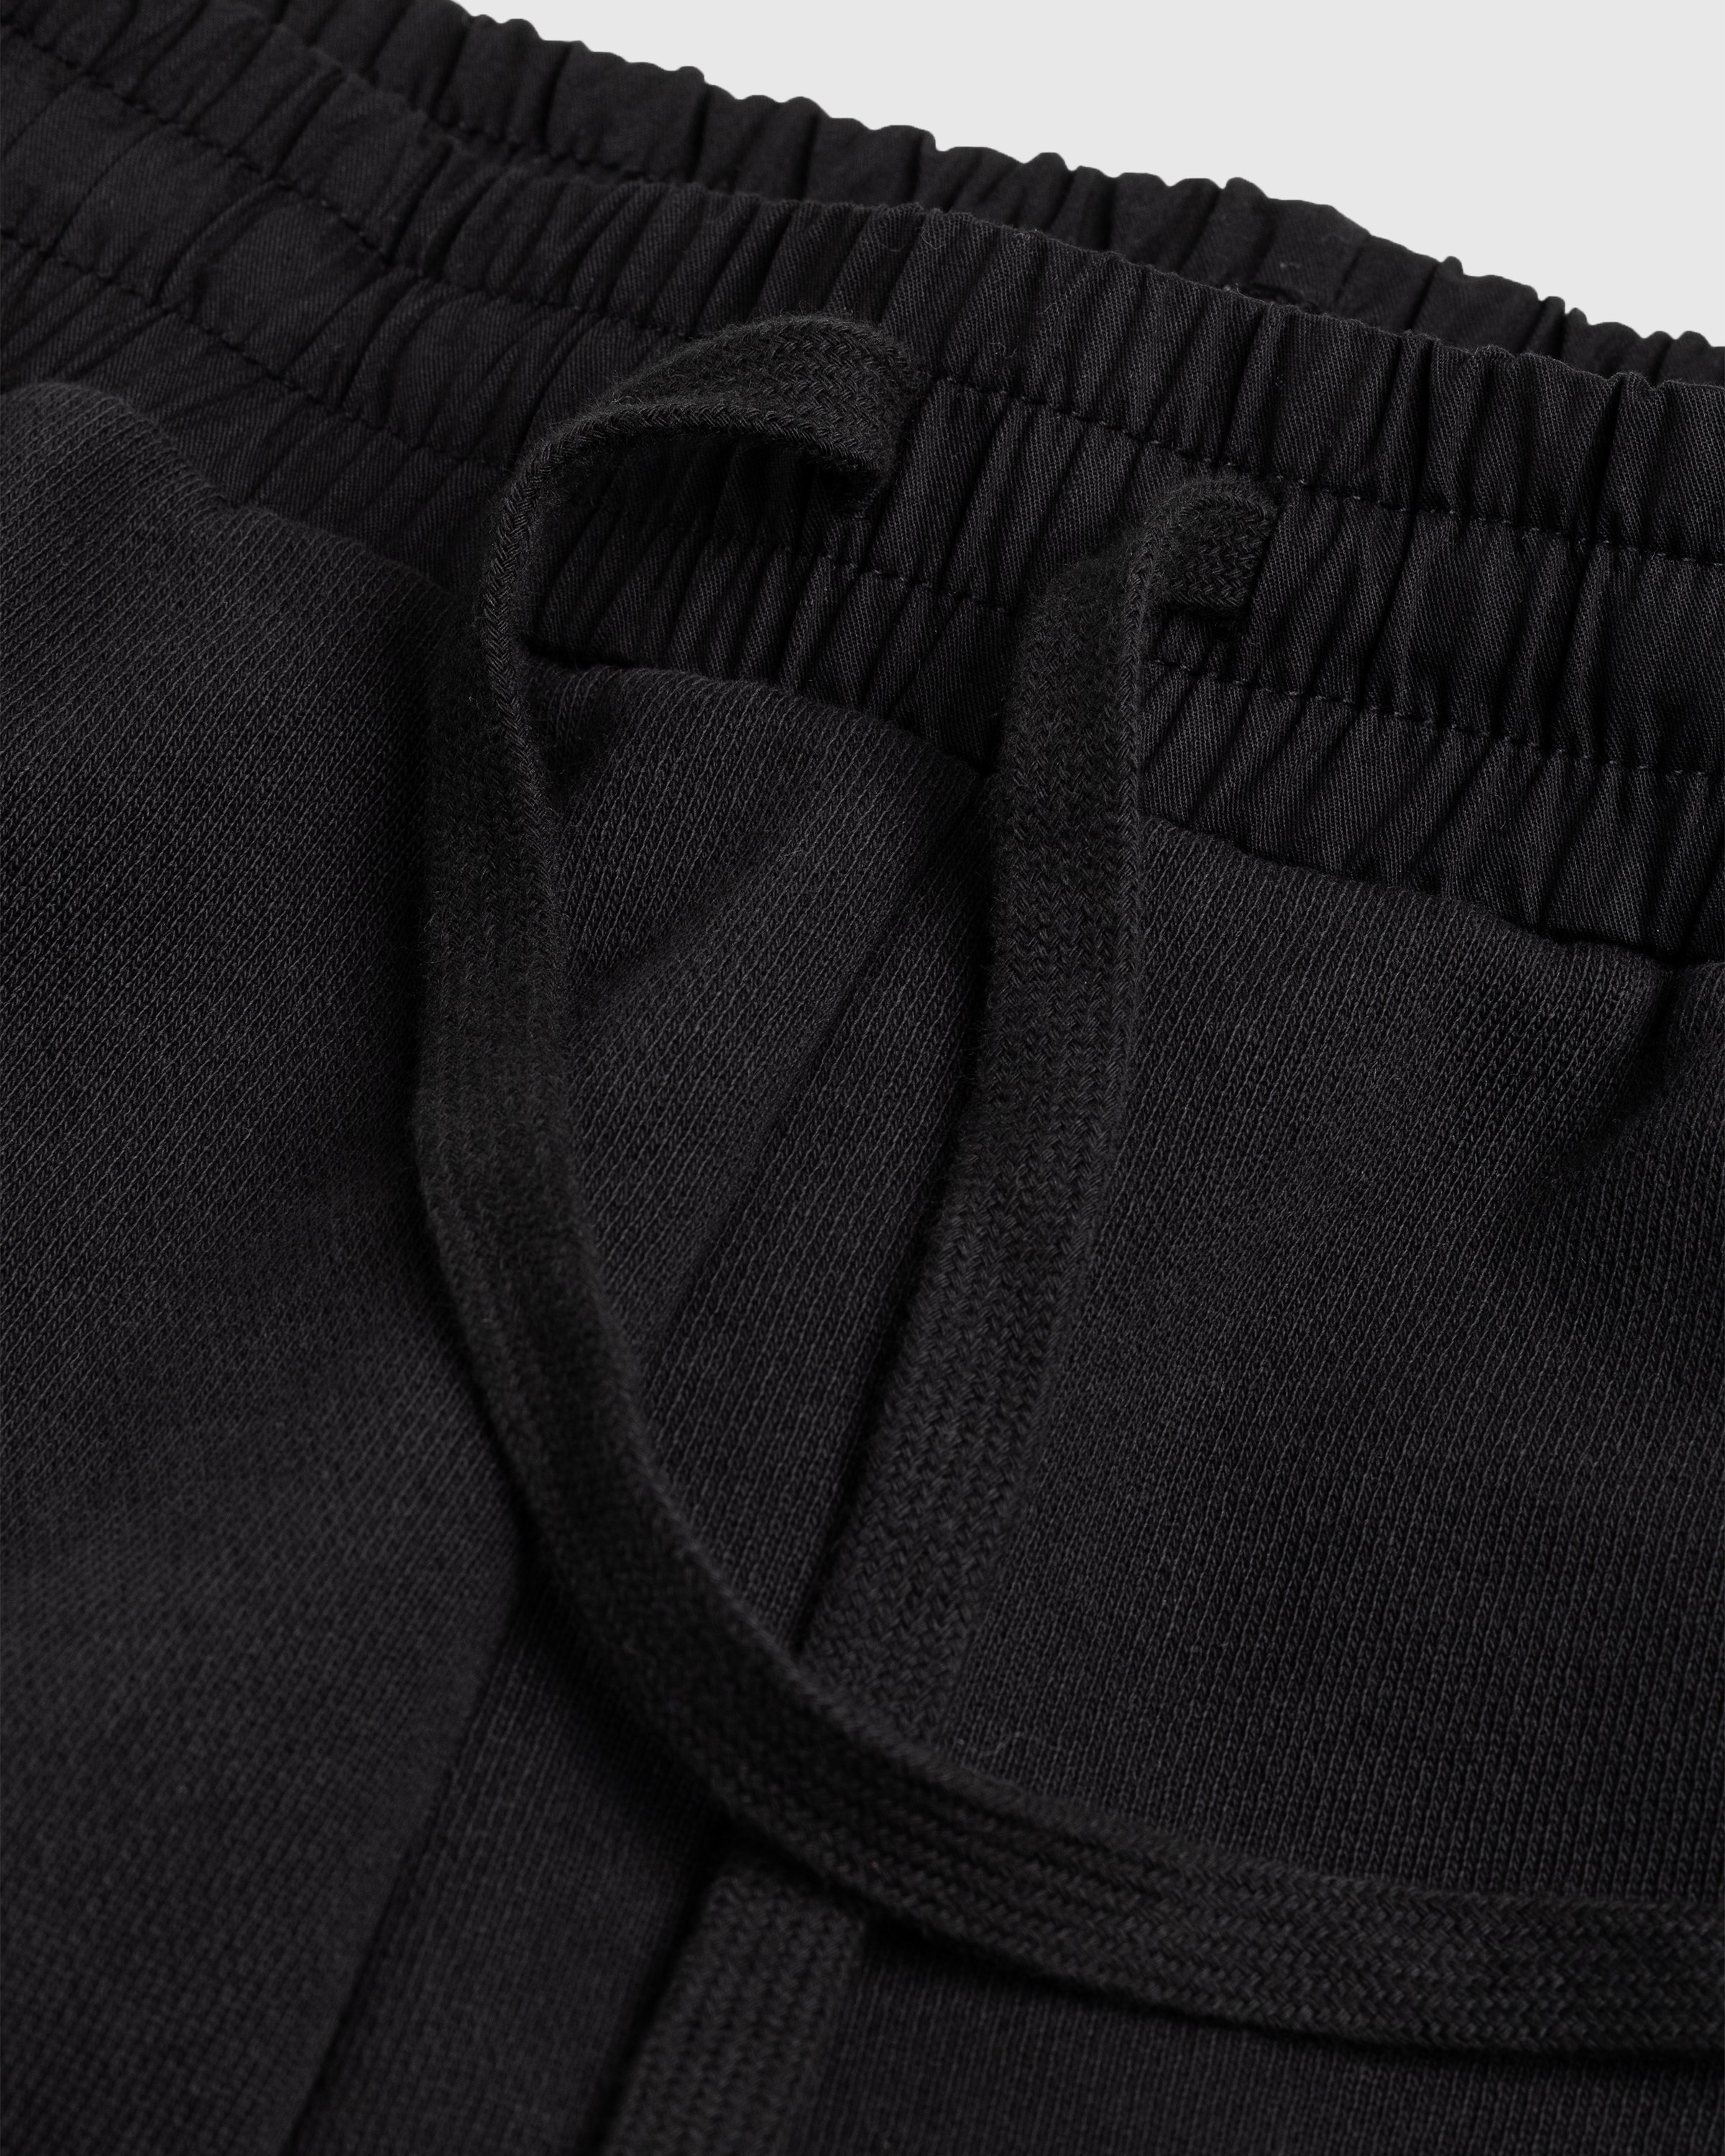 Entire Studios - Utility Sweats Soot - Clothing - Black - Image 6